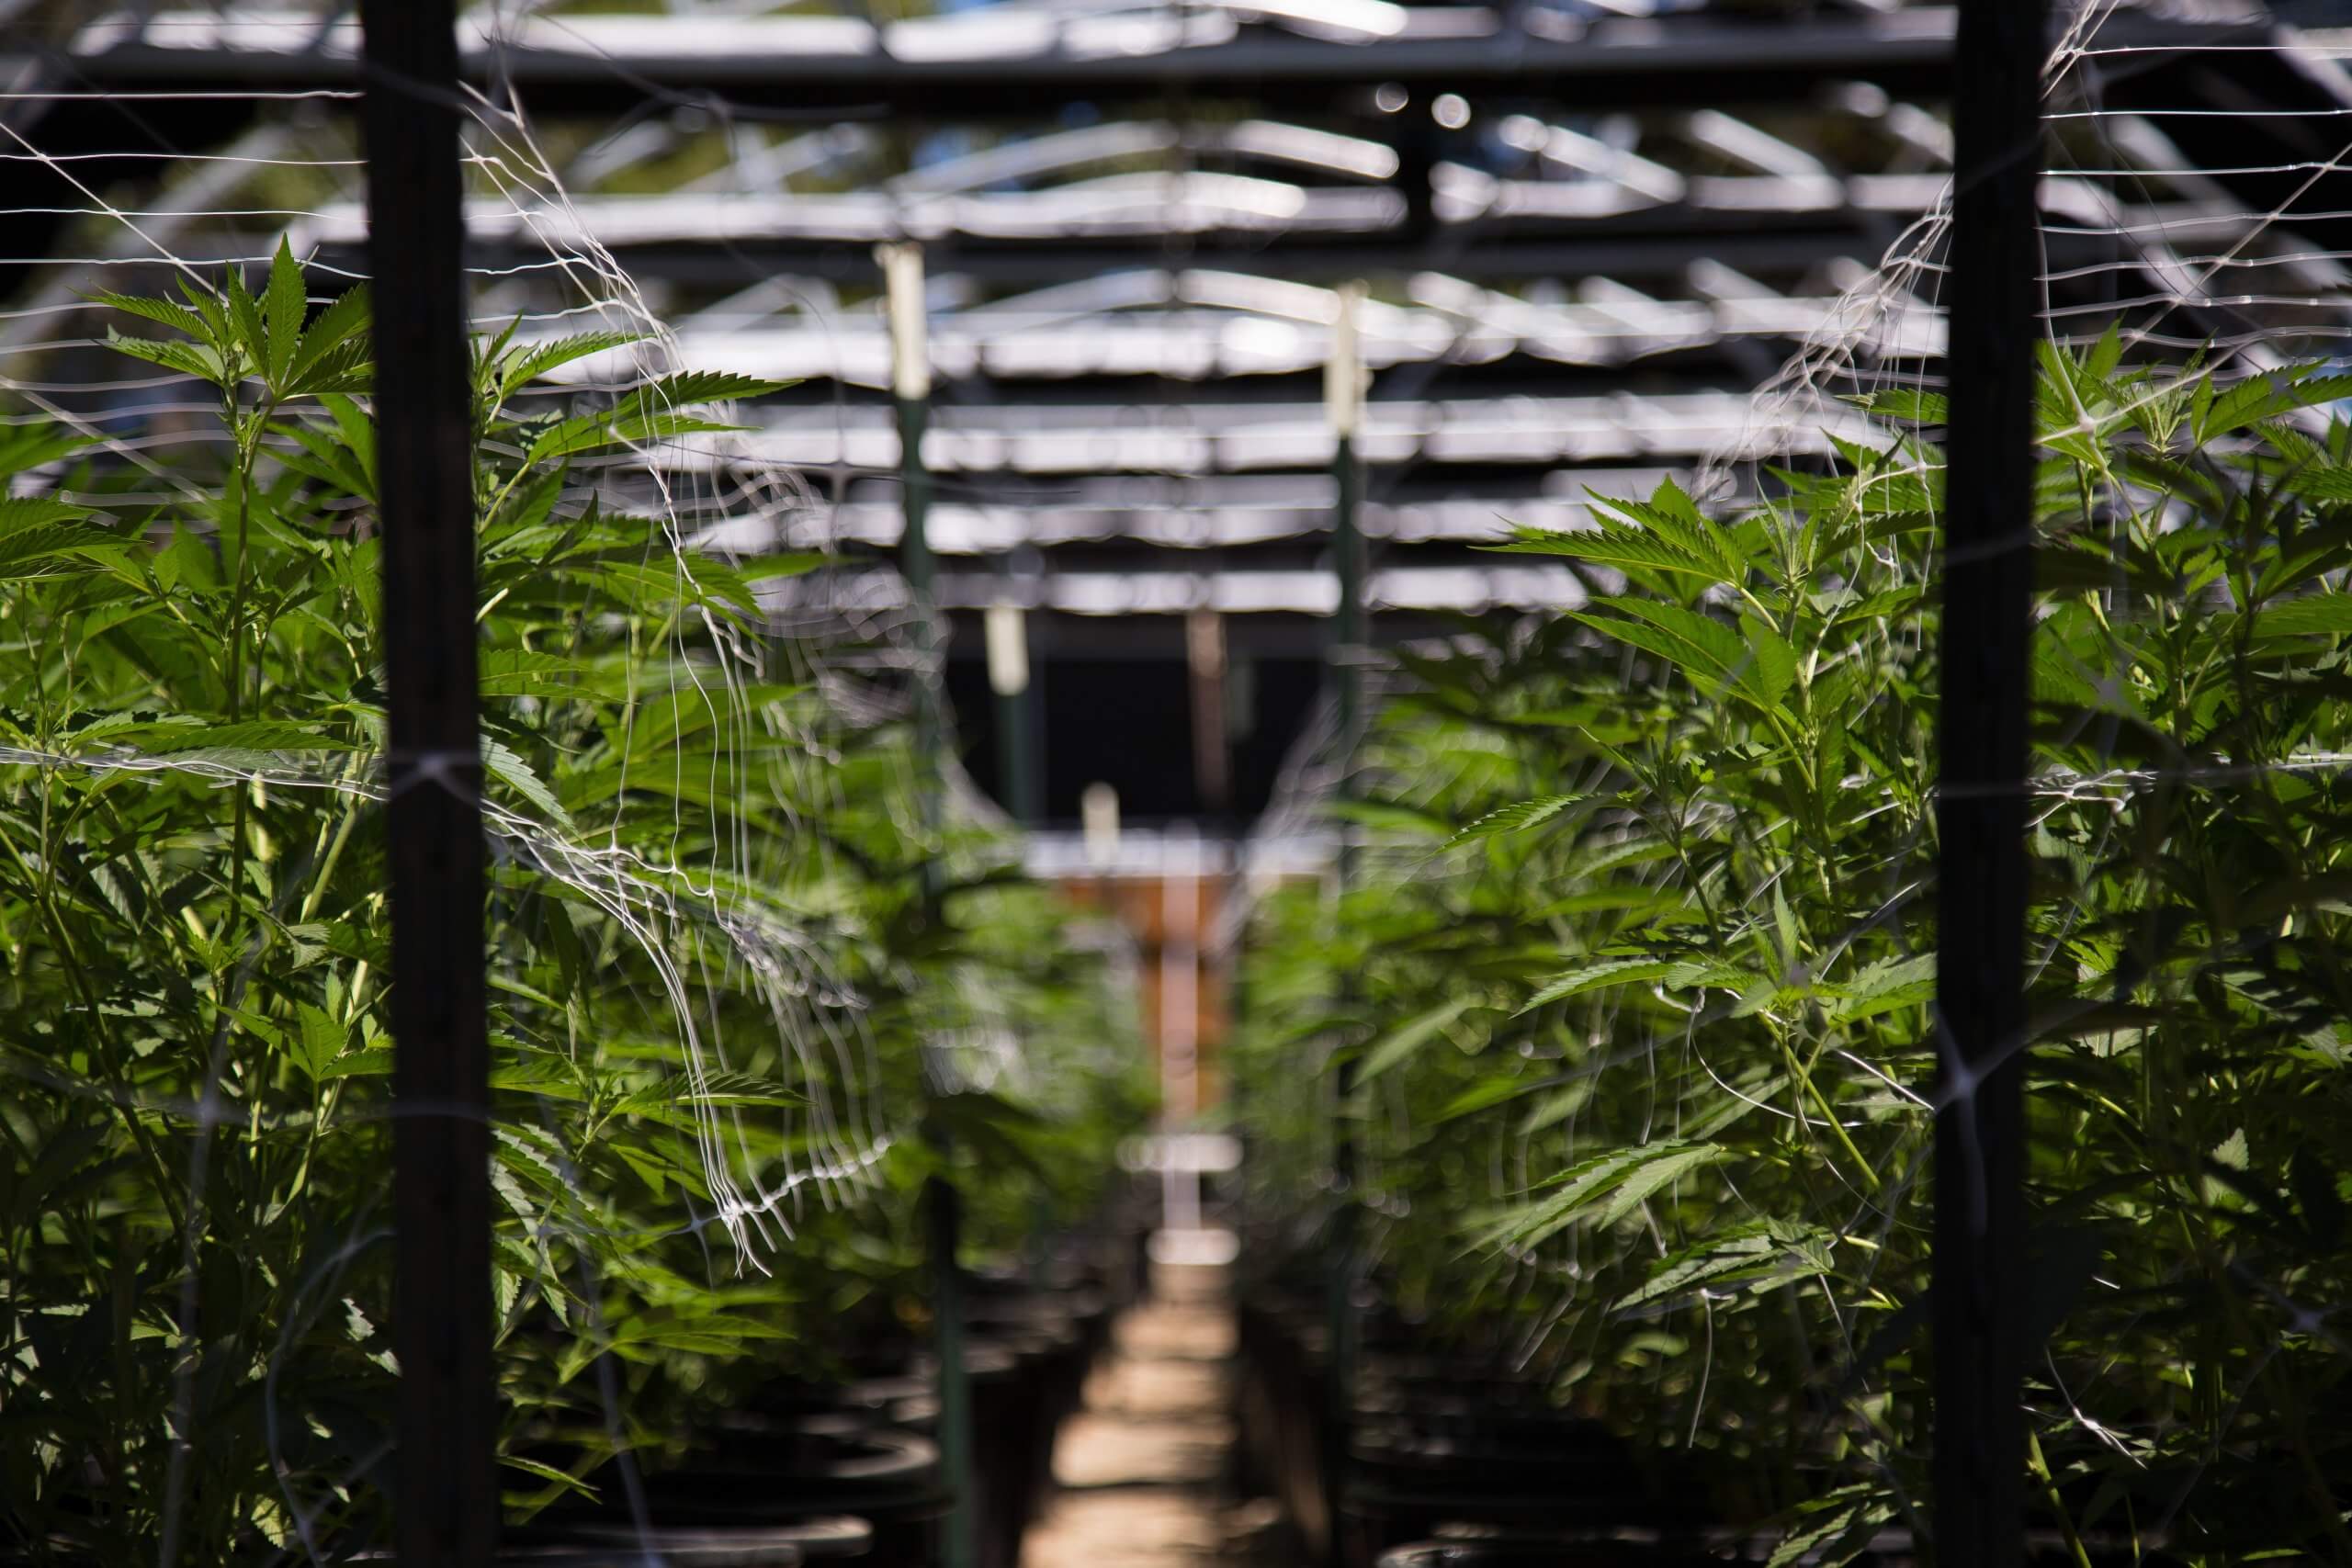 cannabis plants in an industrial dacility